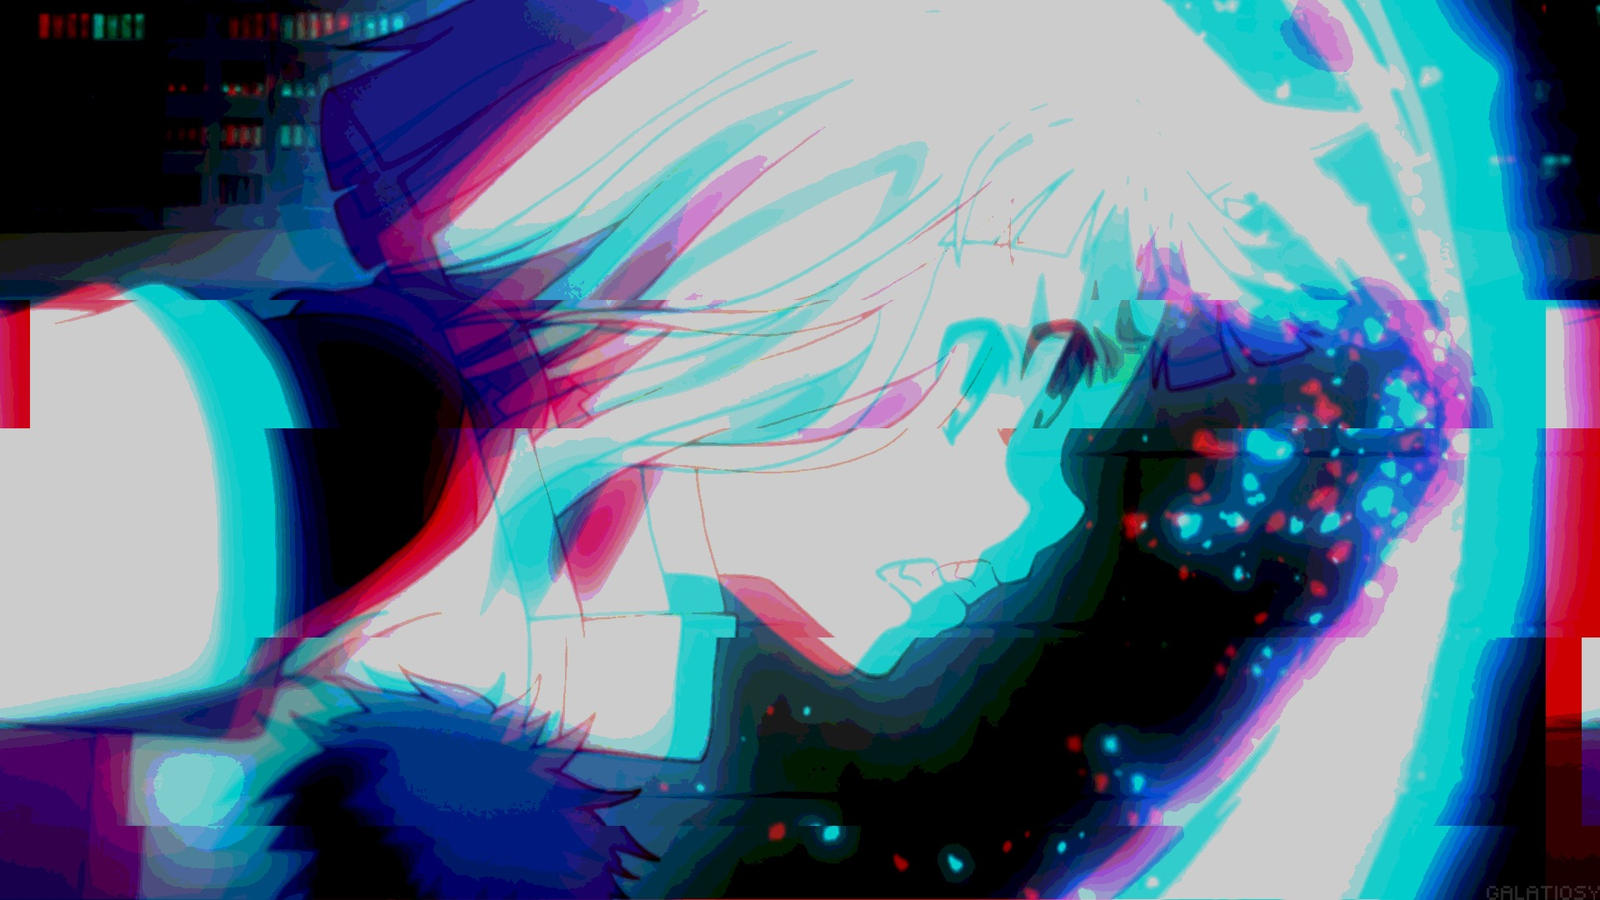 anime girl aesthetic glitch 8k ultra hd wallpaper by Galatios on DeviantArt